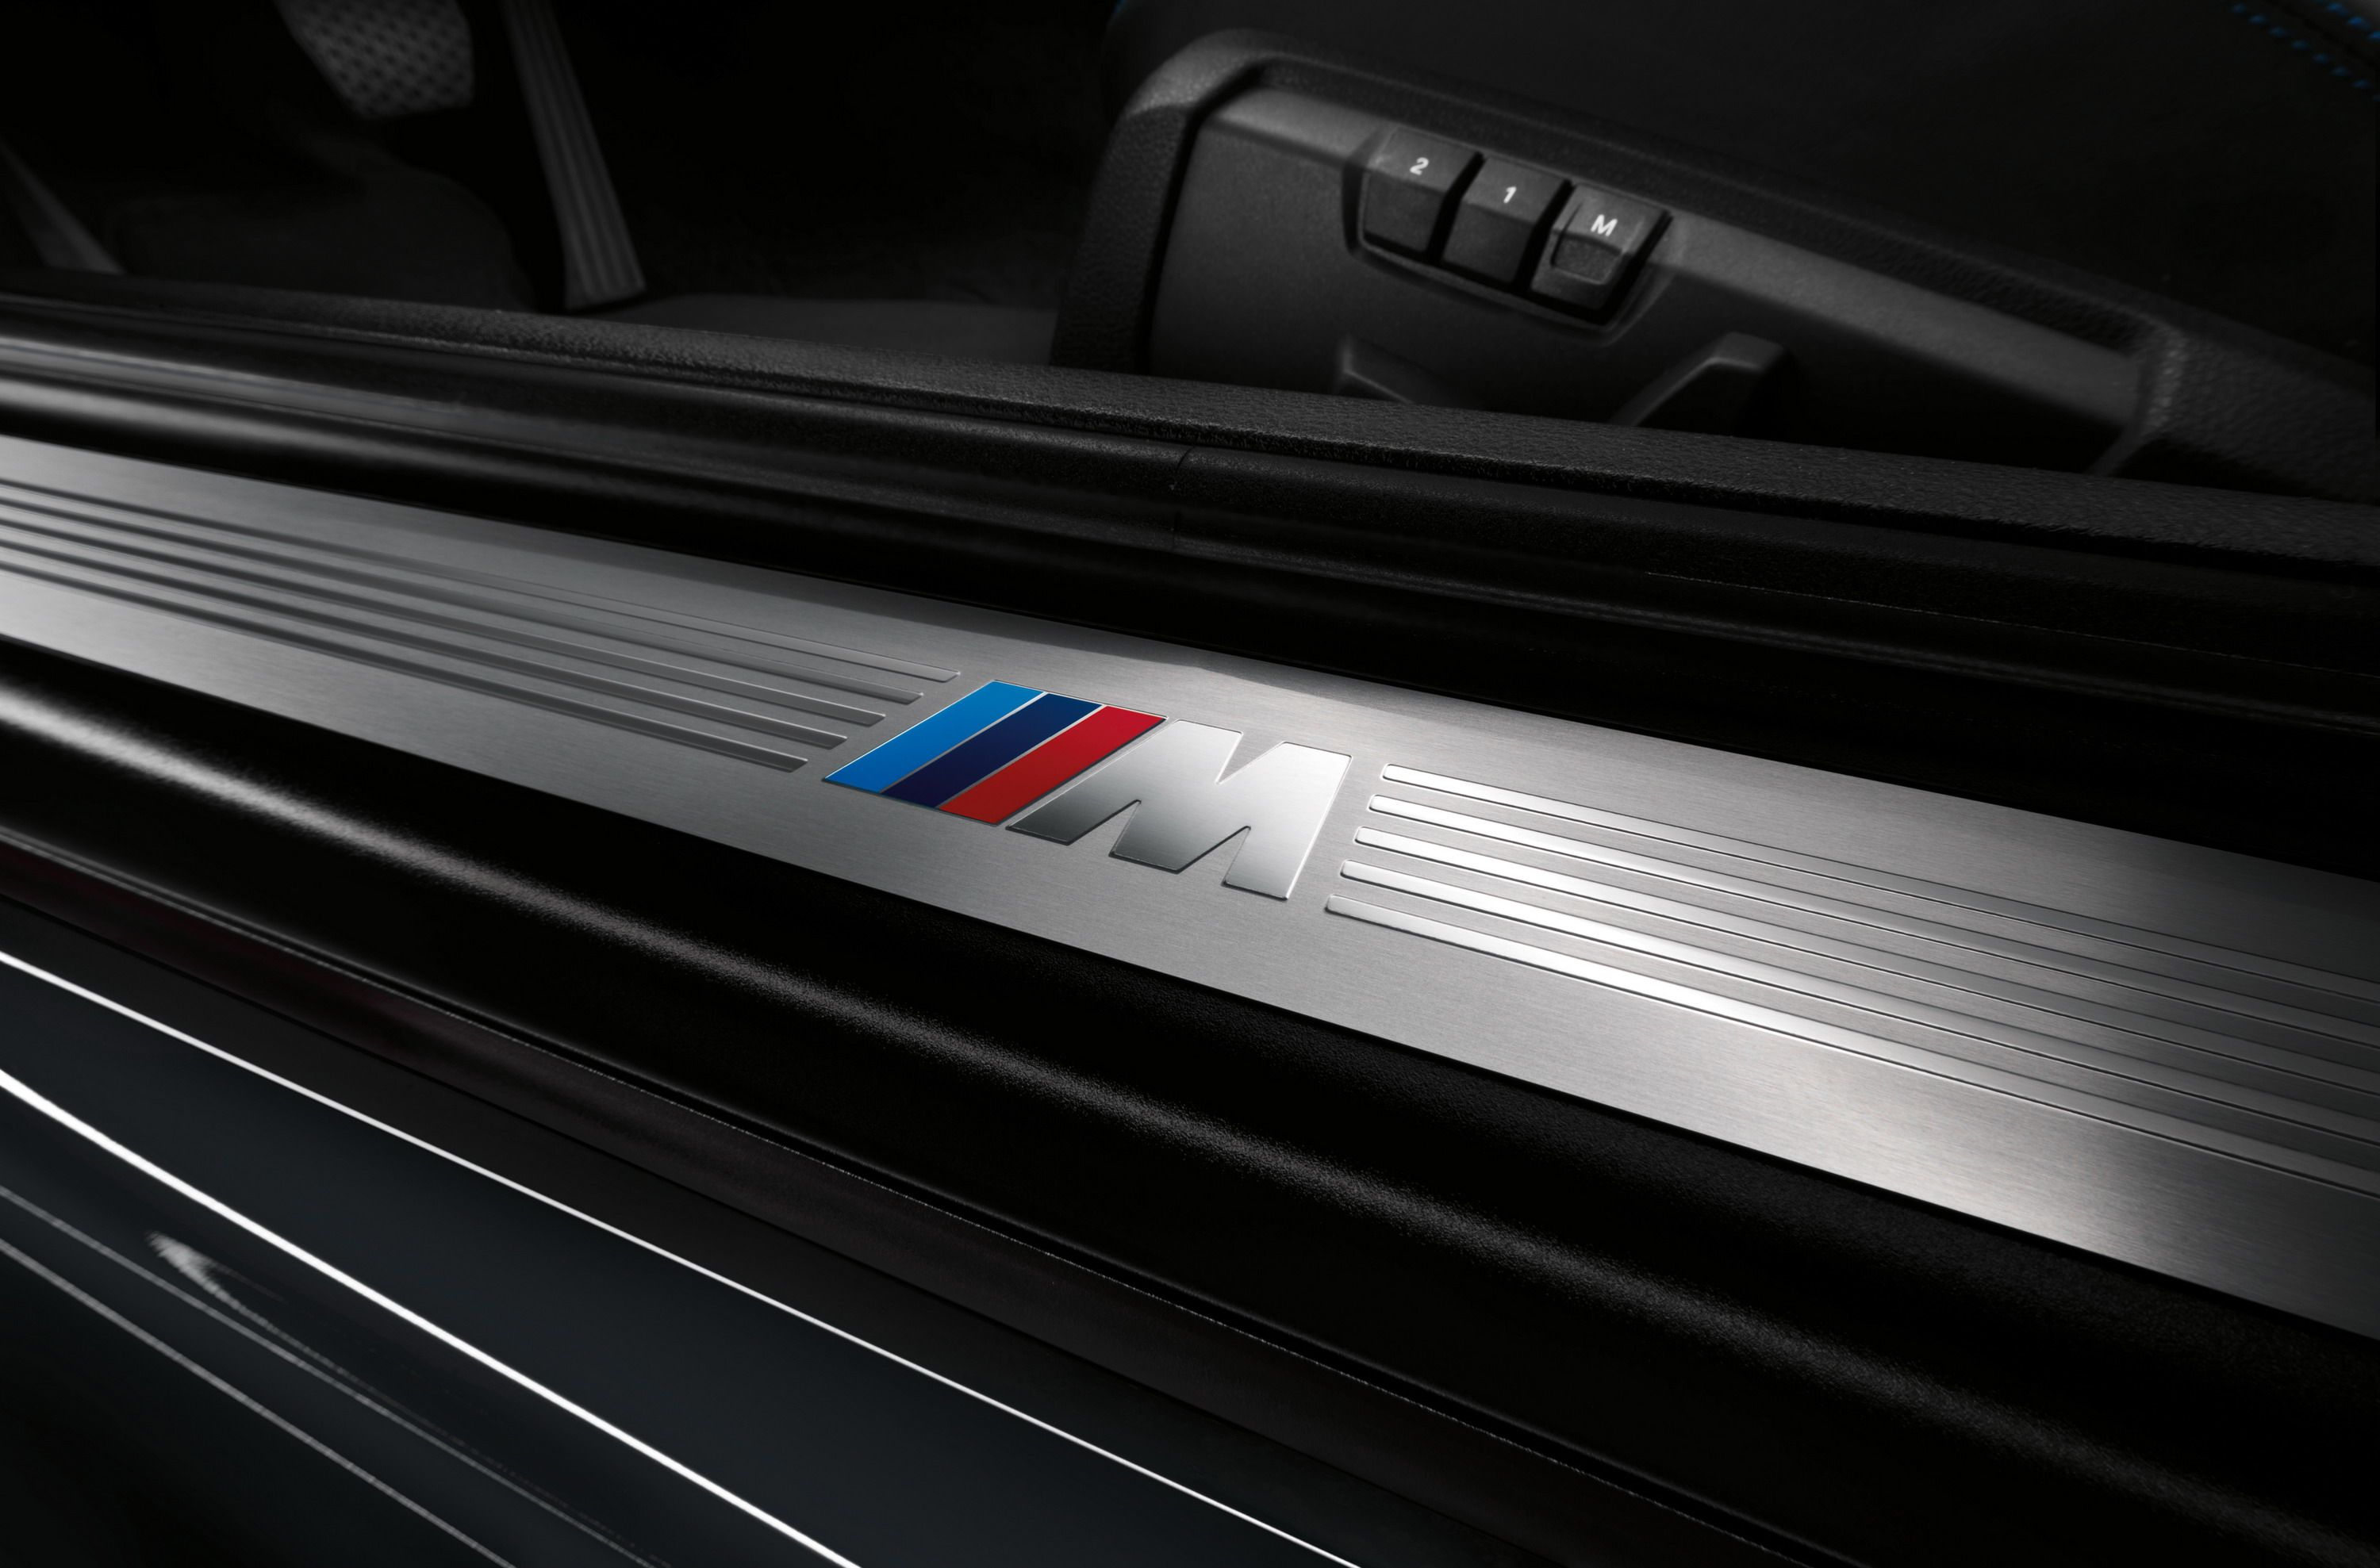 2013 BMW 6-Series M Sport Edition